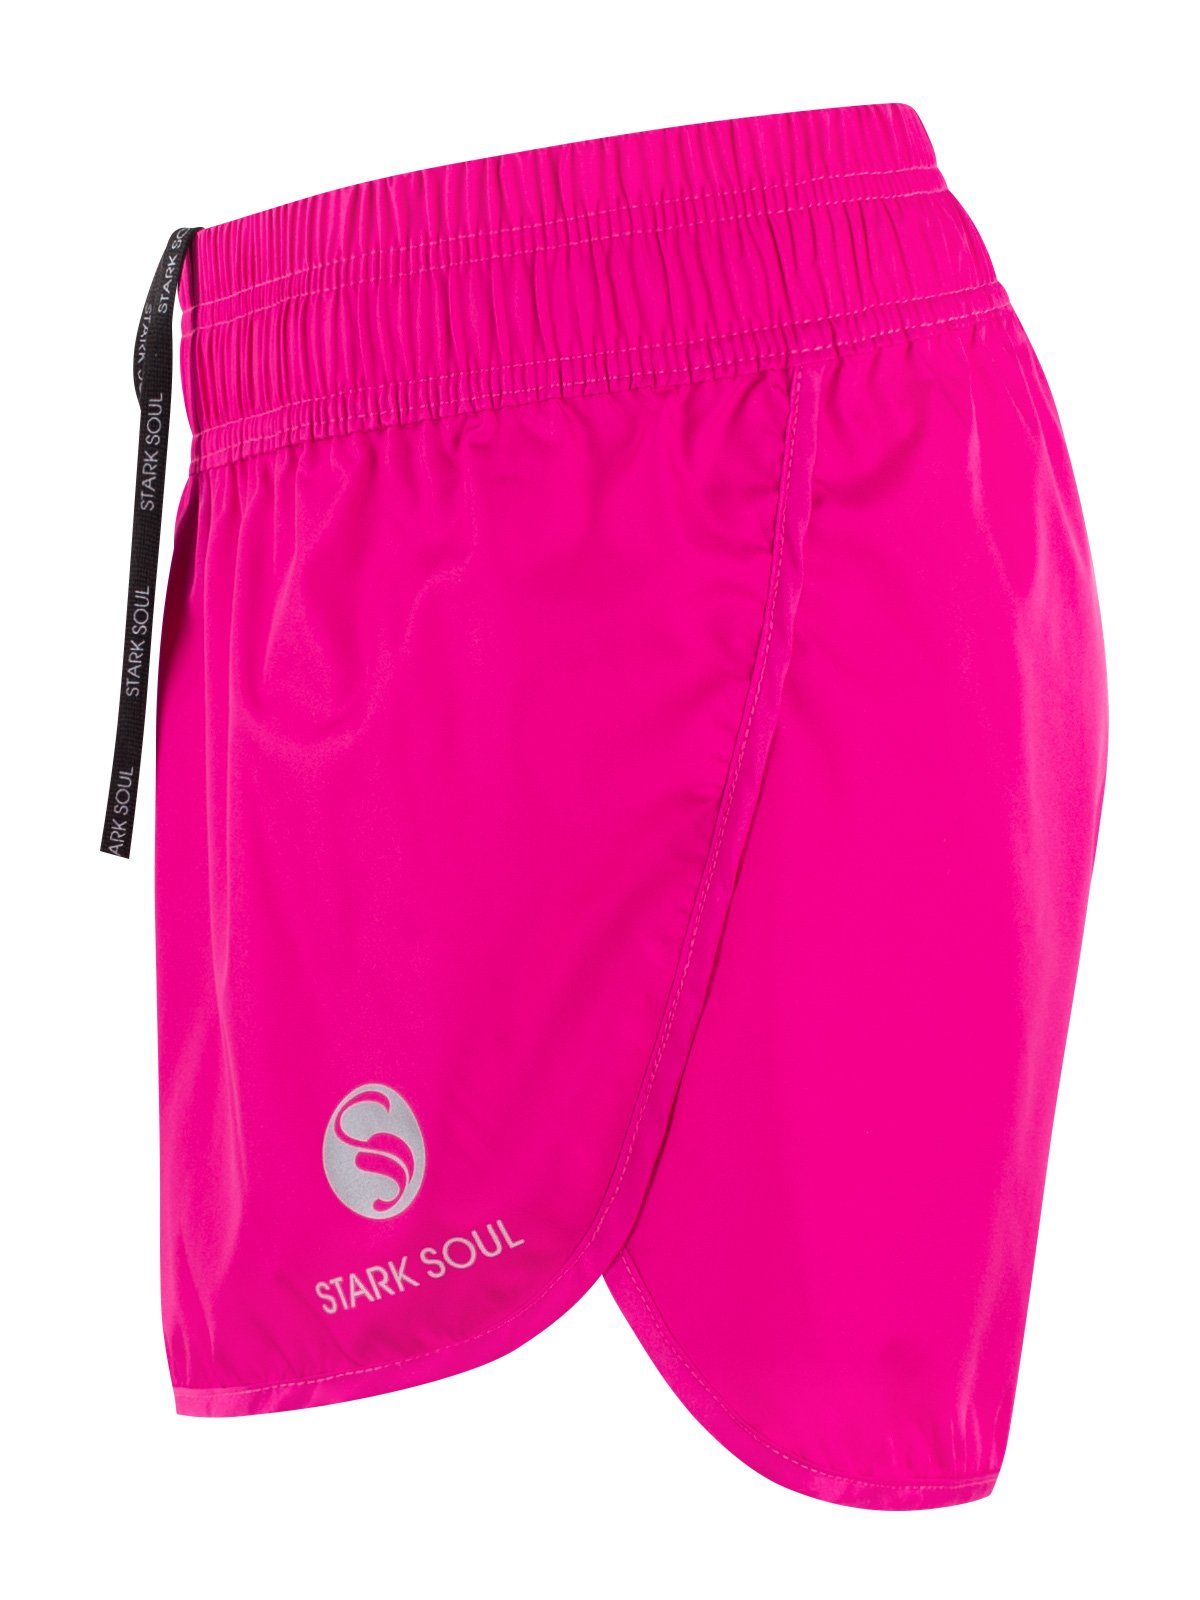 Stark Sport aus - Short Dry Soul® Material Quick - Sporthose Sporthose kurze Pink Schnelltrocknend